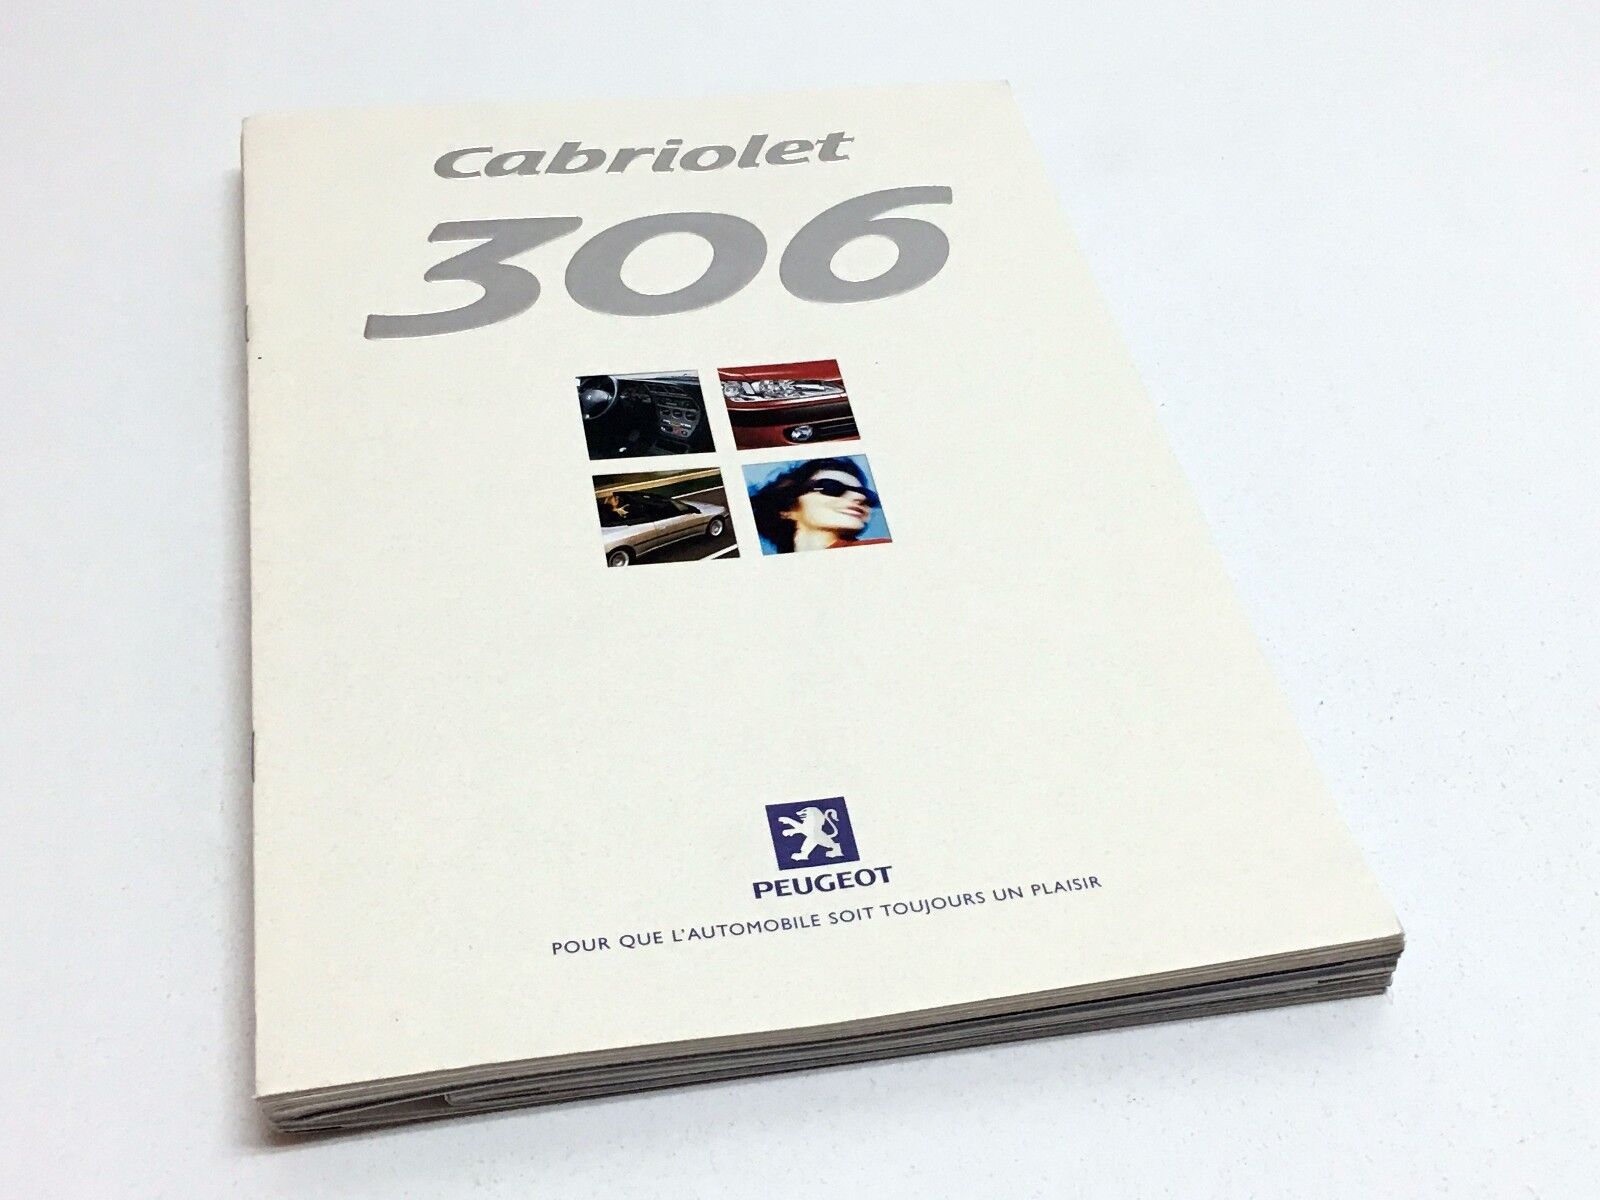 1999 2000 Peugeot 306 Cabriolet Brochure - French - 7/99